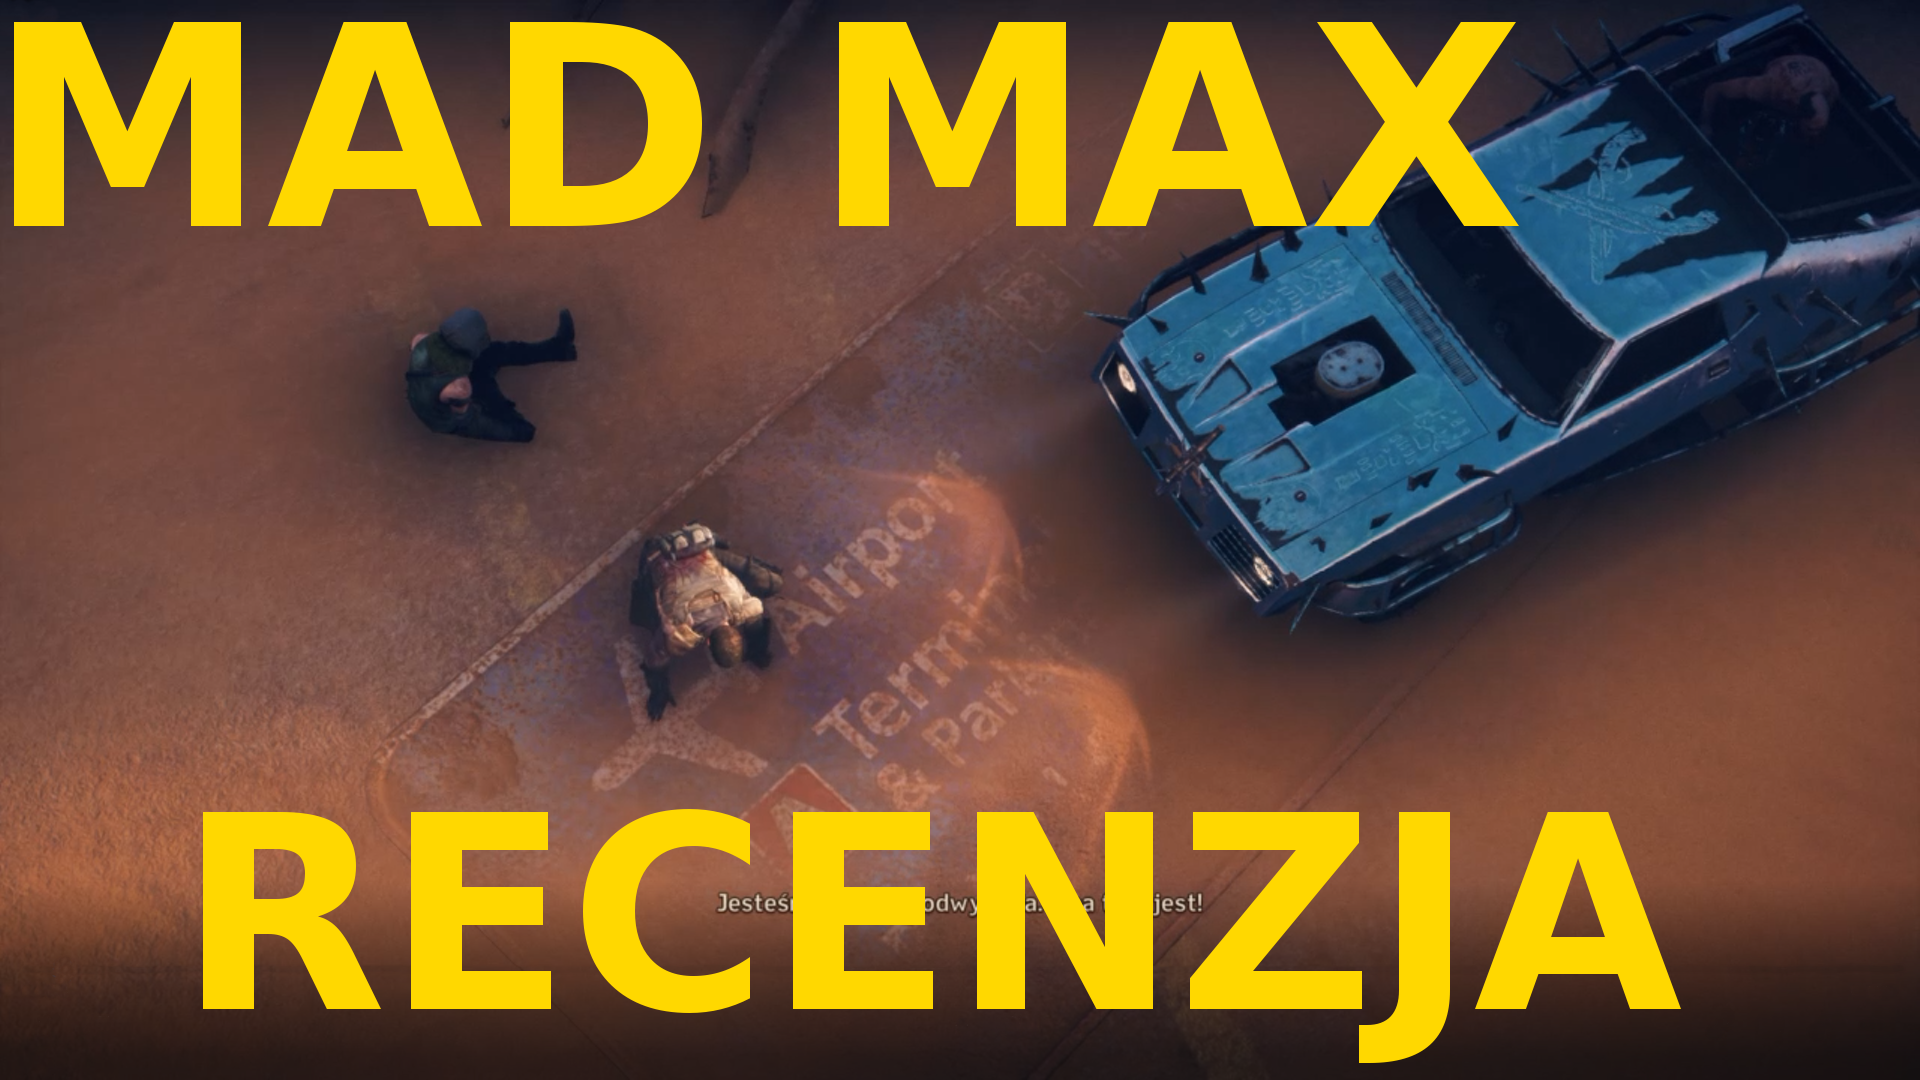 Recenzja gry Mad Max